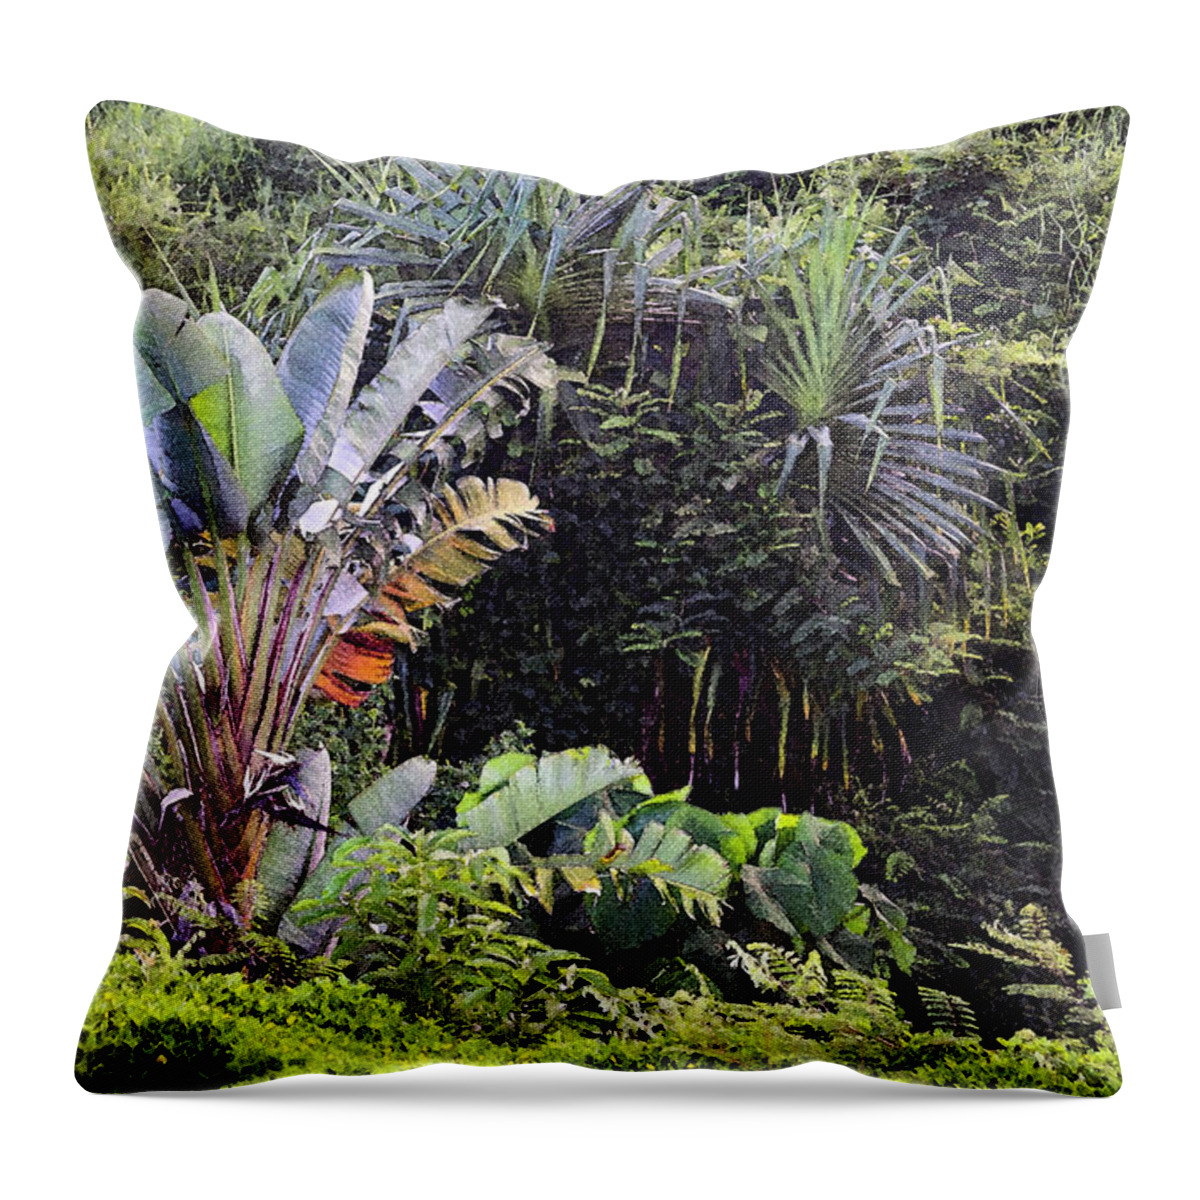 Kauai Jungle Throw Pillow featuring the photograph Kauai Jungle #1 by Frank Wilson